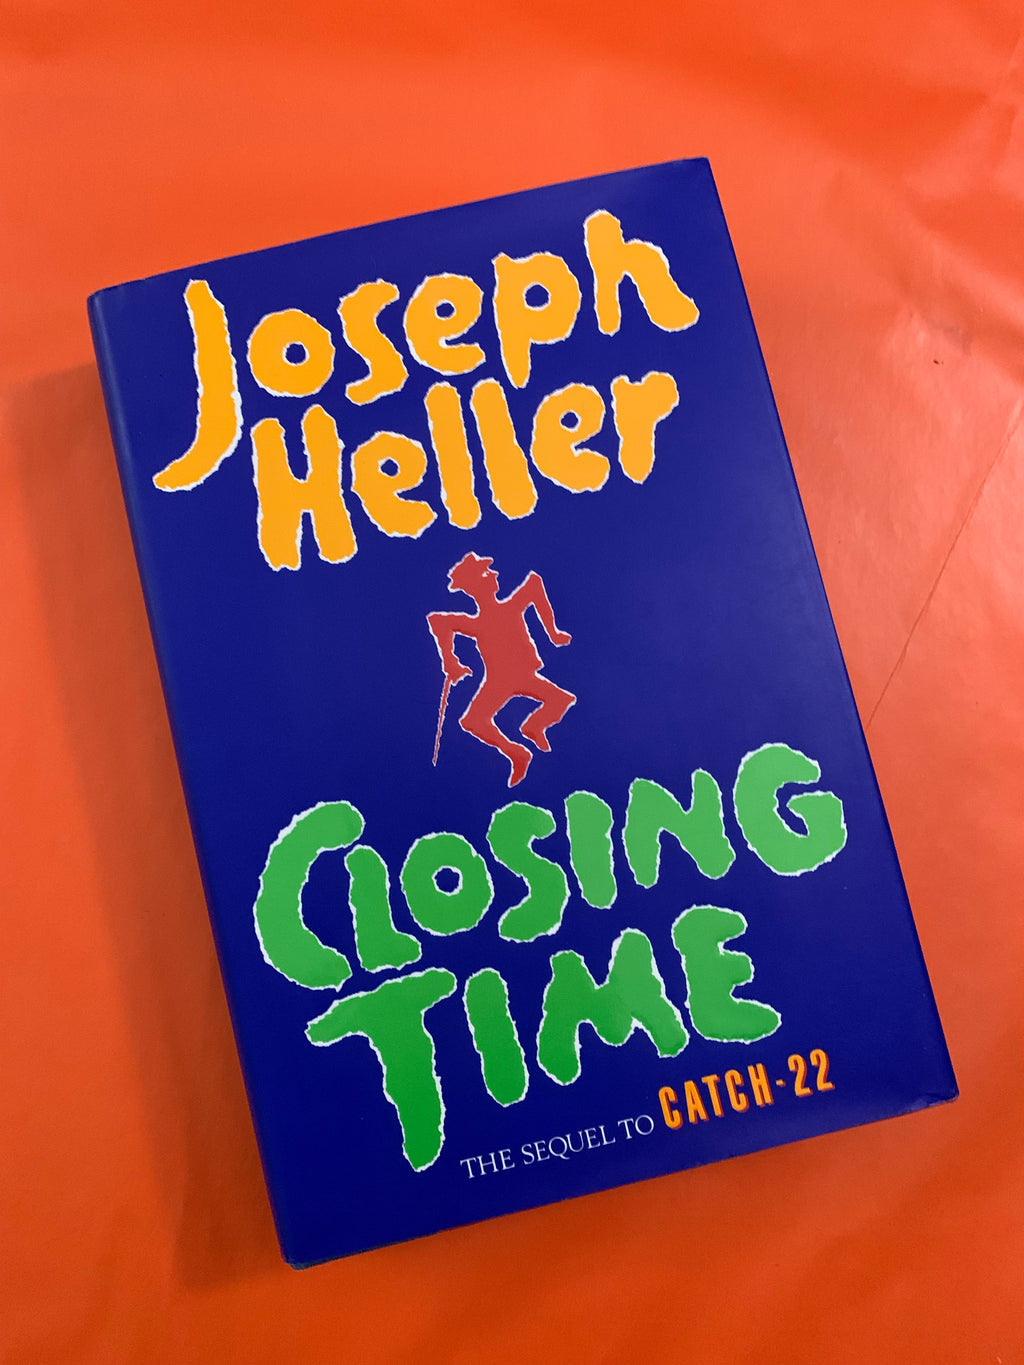 Closing Time- By Joseph Heller